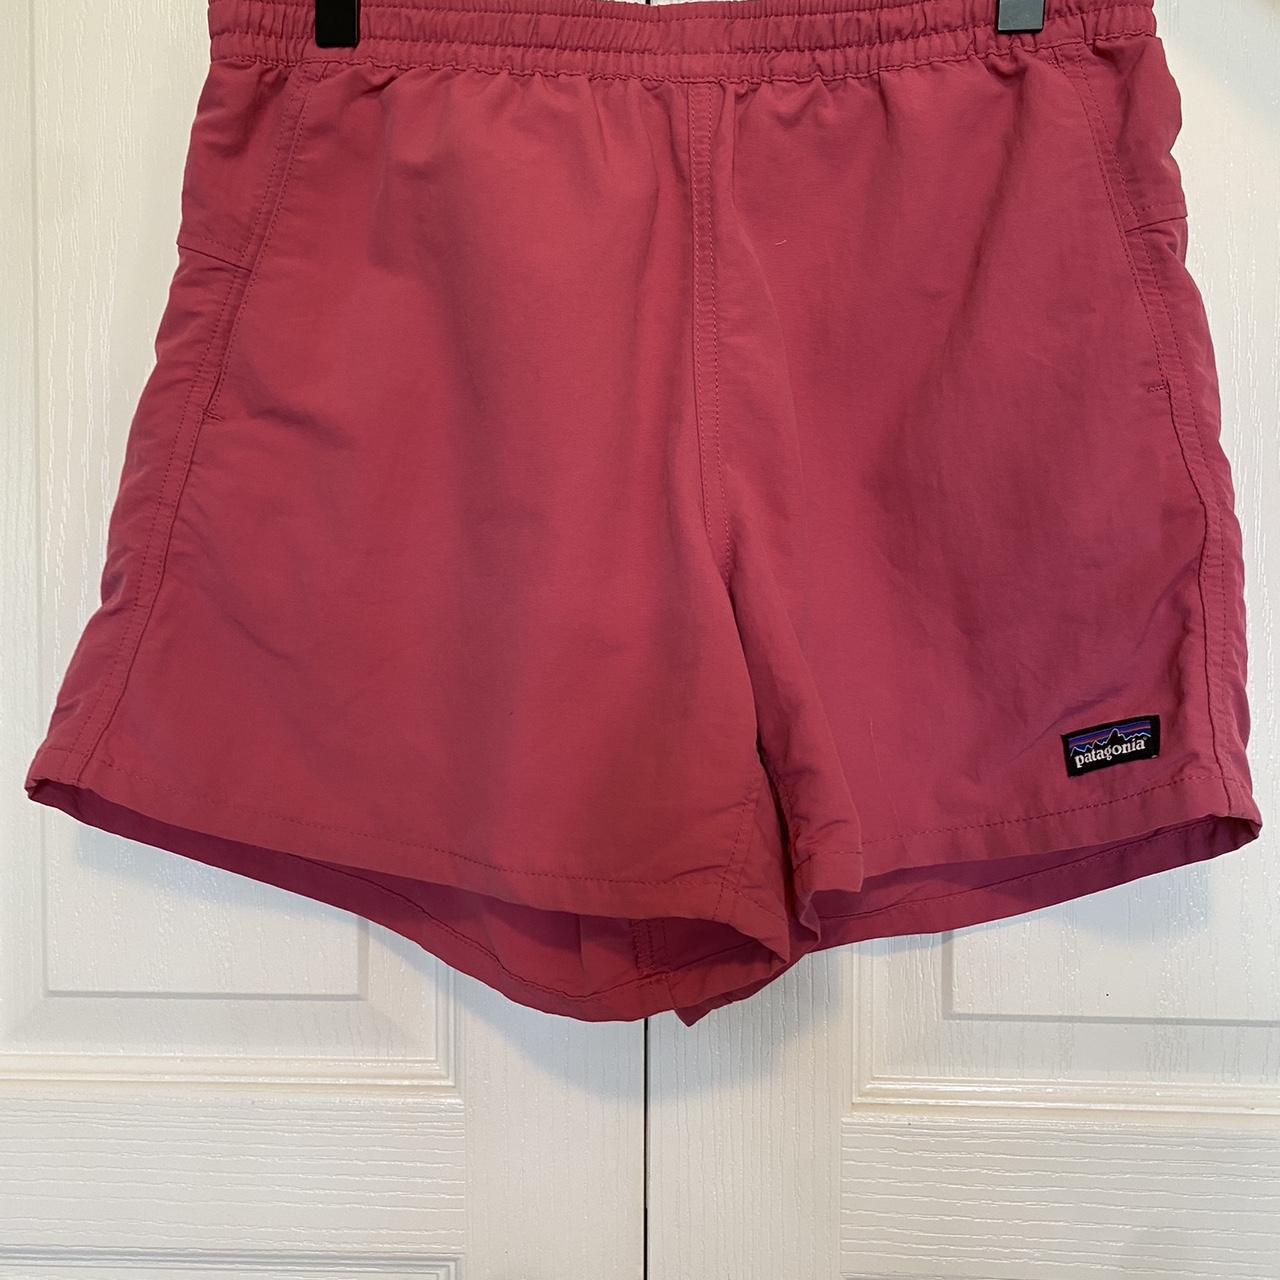 Super cute pink Patagonia shorts - Depop